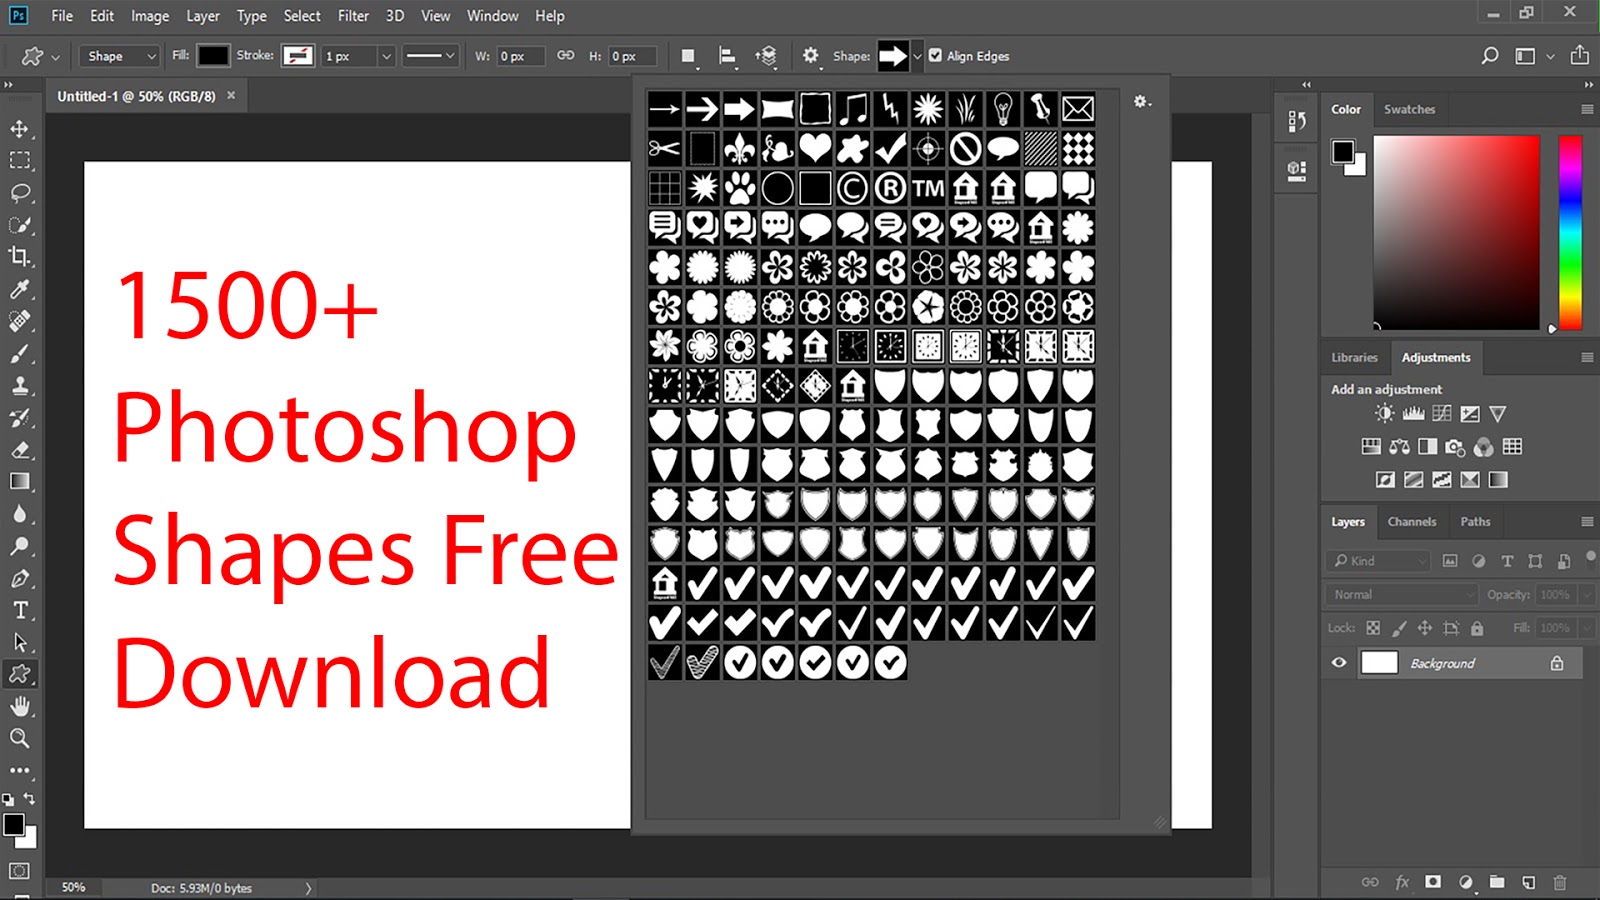 Custom shapes download photoshop adobe photoshop cs6 windows 7 64 bit free download